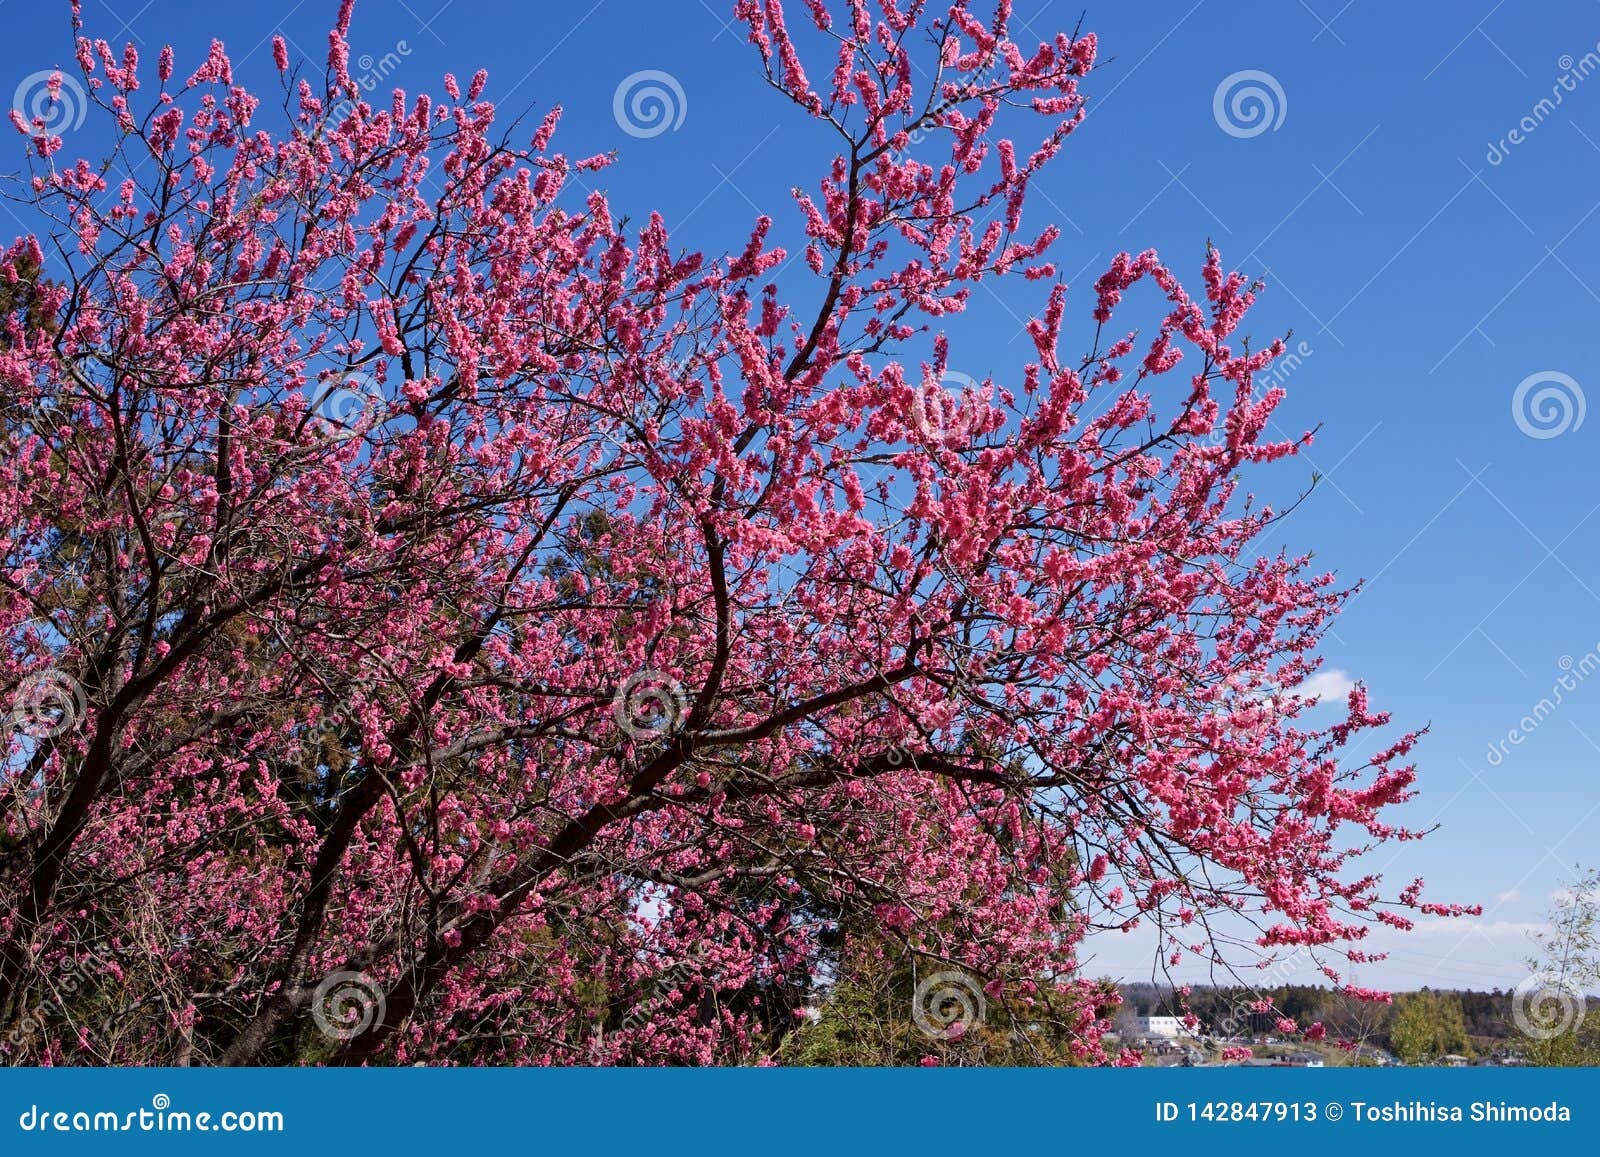 Beautiful Flowering Peach Trees in Full Bloom. Stock Image - Image of ...